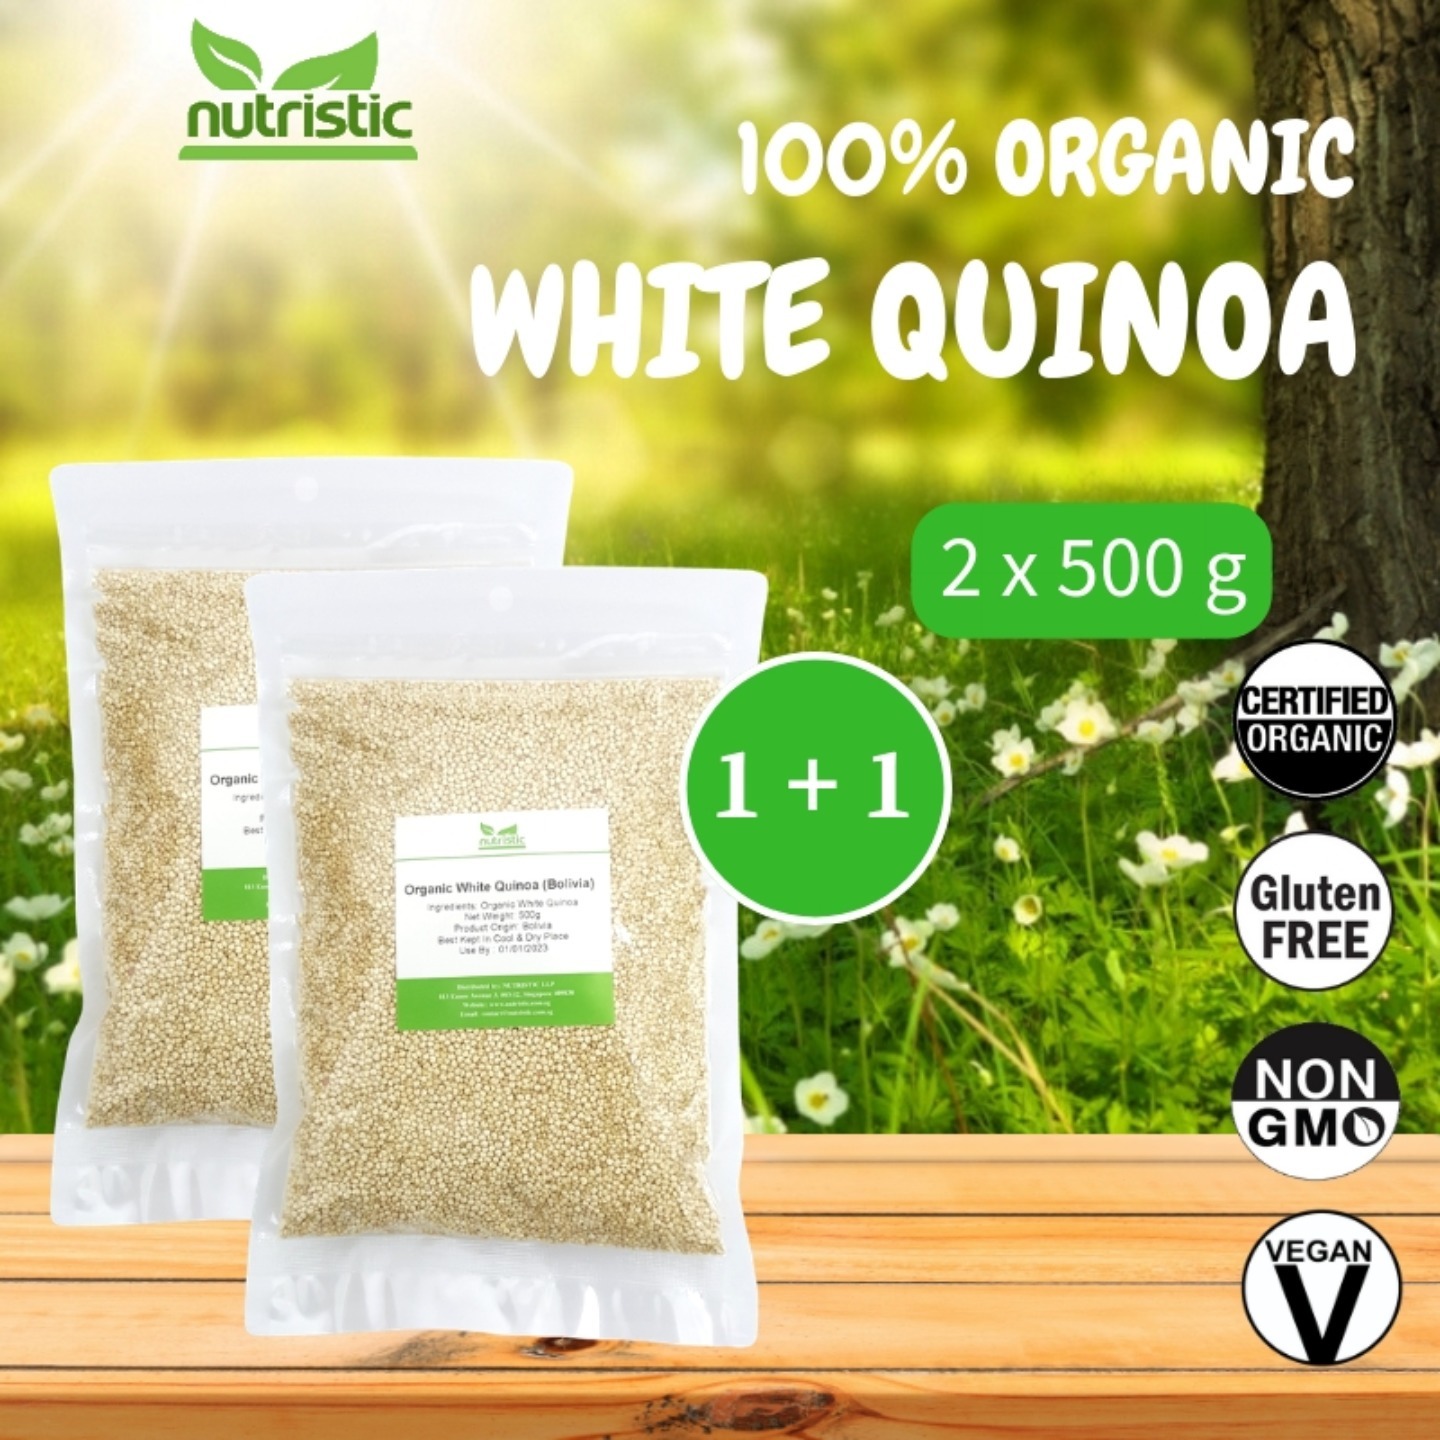 Organic White Quinoa 500g x2 - Value Bundle 1+1